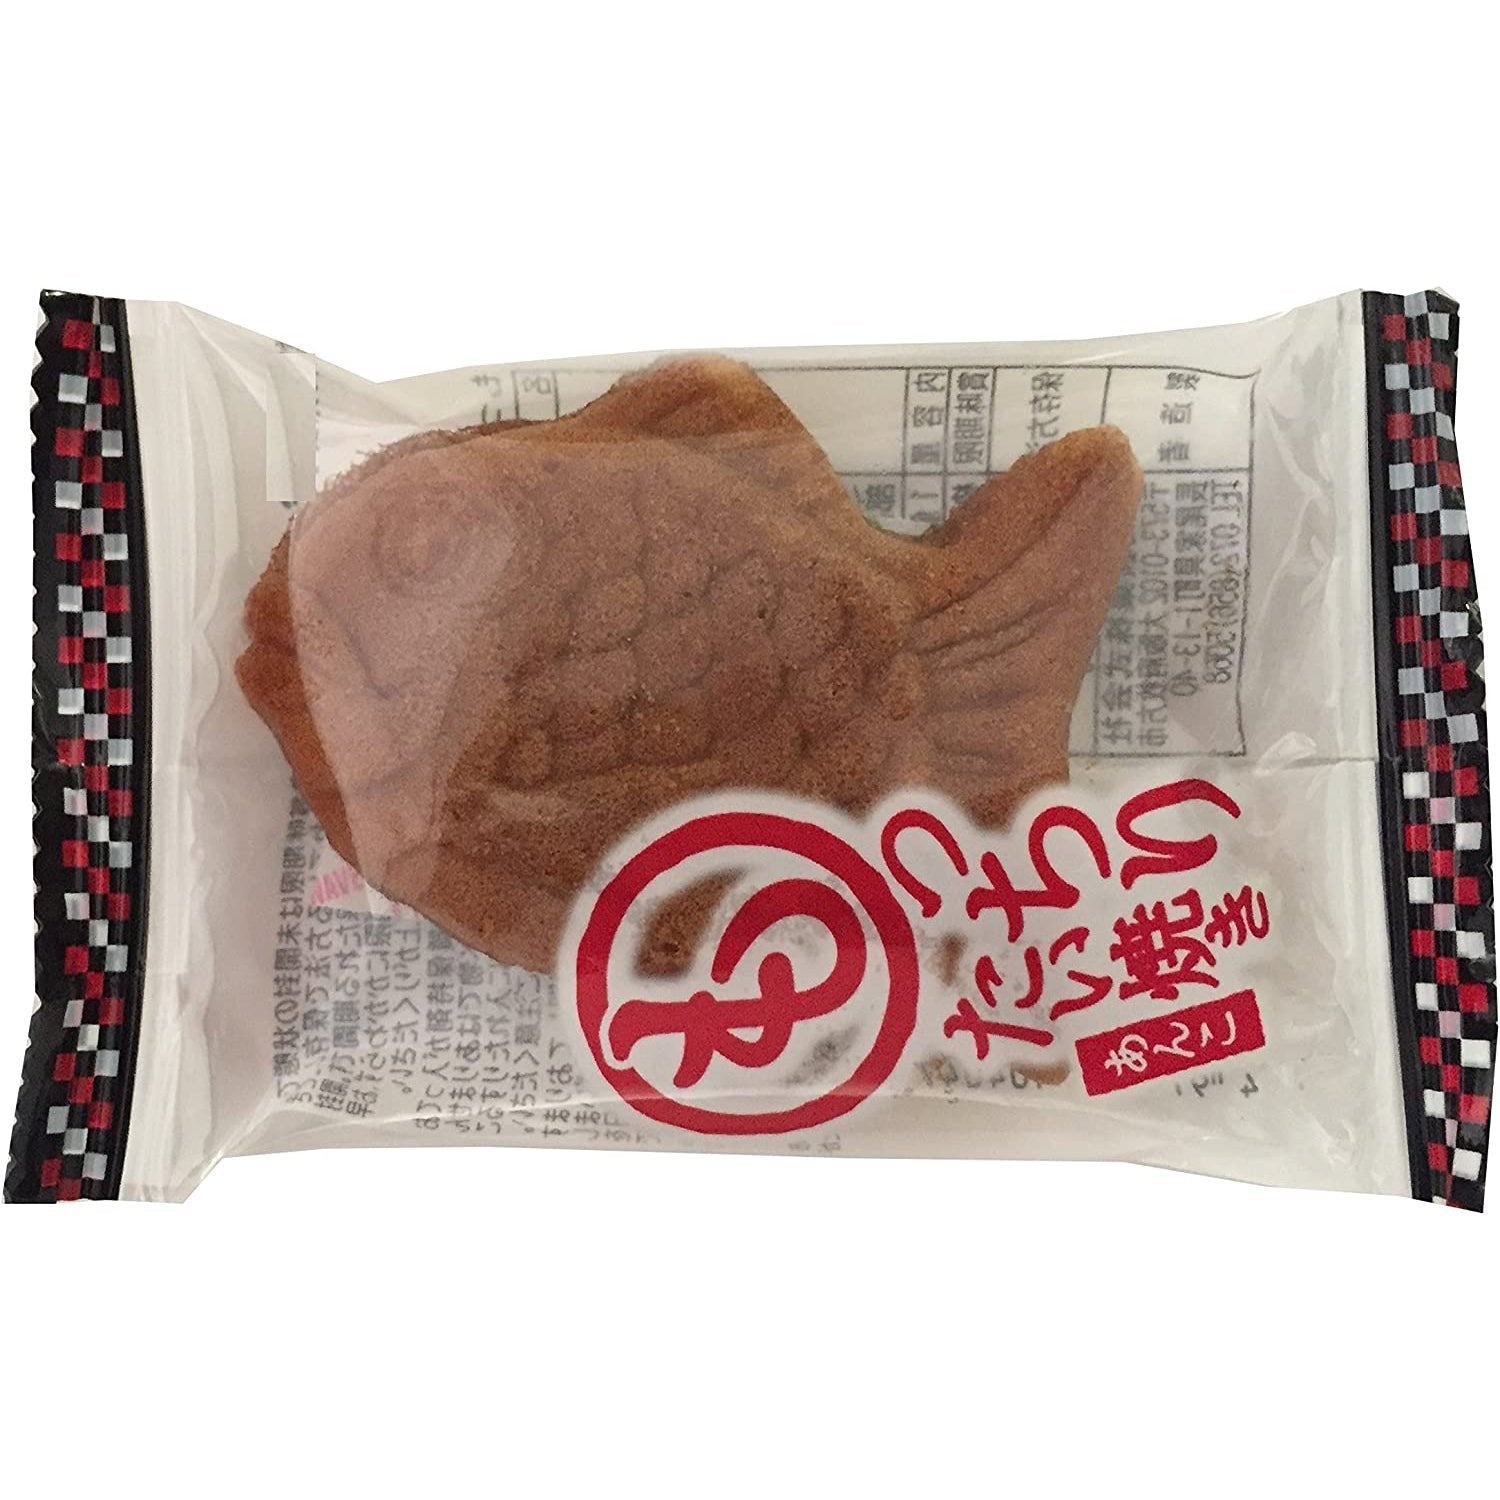 Buy Japanese Taiyaki Products Online – Japanese Taste